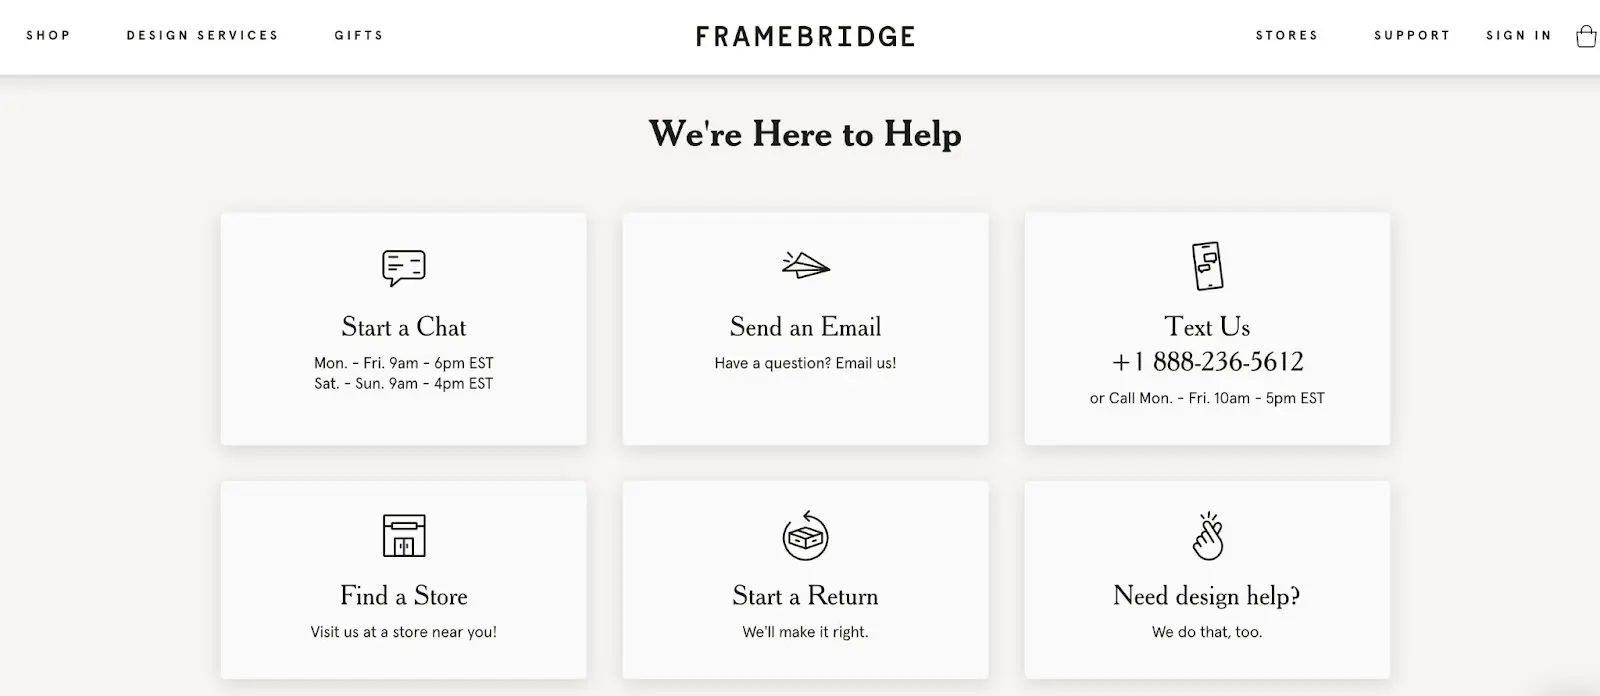 Framebridge's help center is detailed, easily scannable, and straightforward.